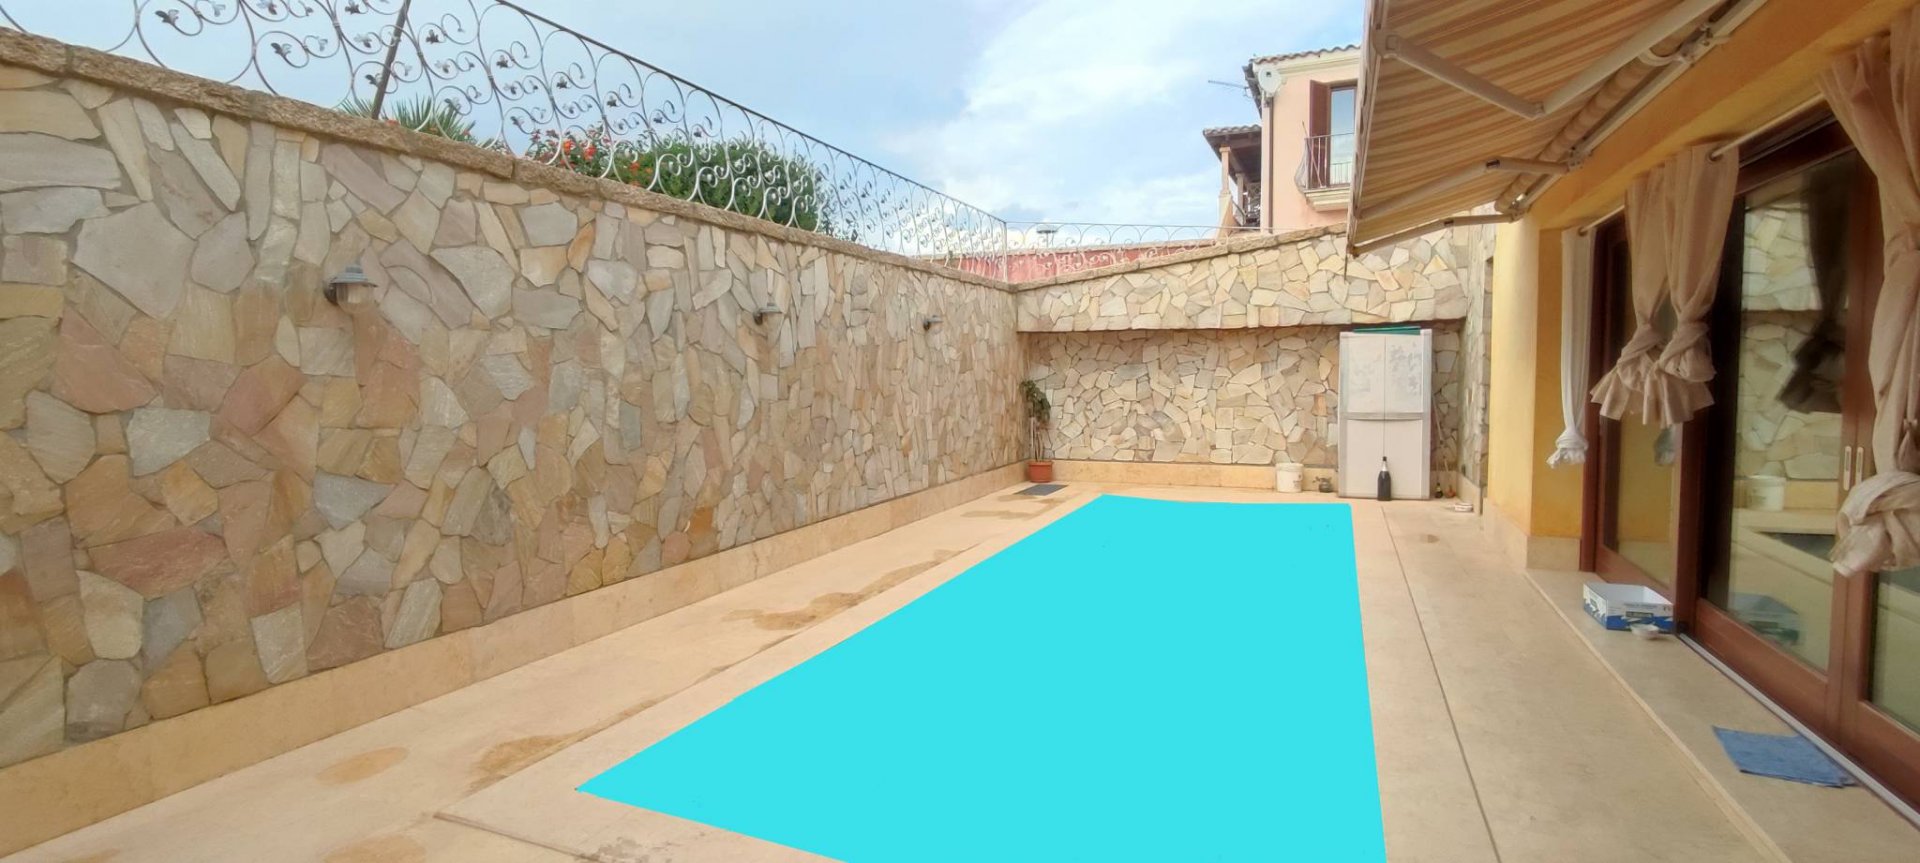 Villa caposchiera con piscina